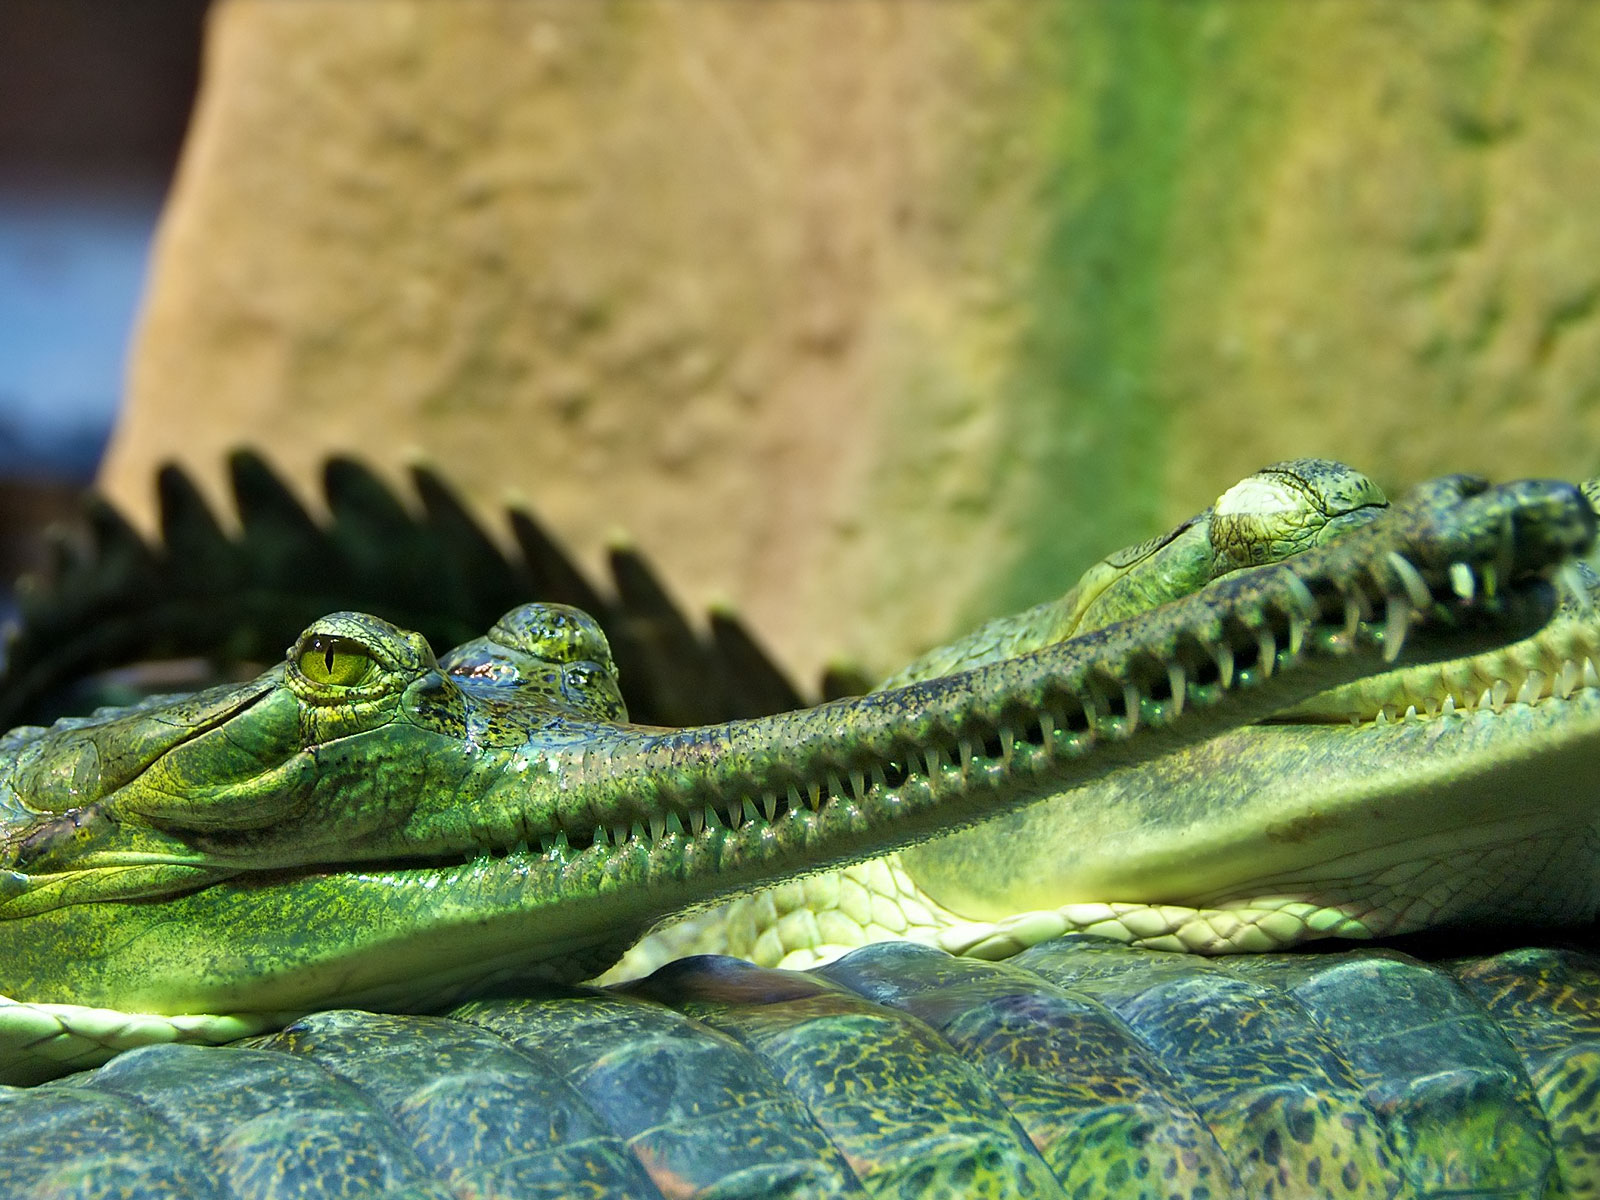 Gange gavial